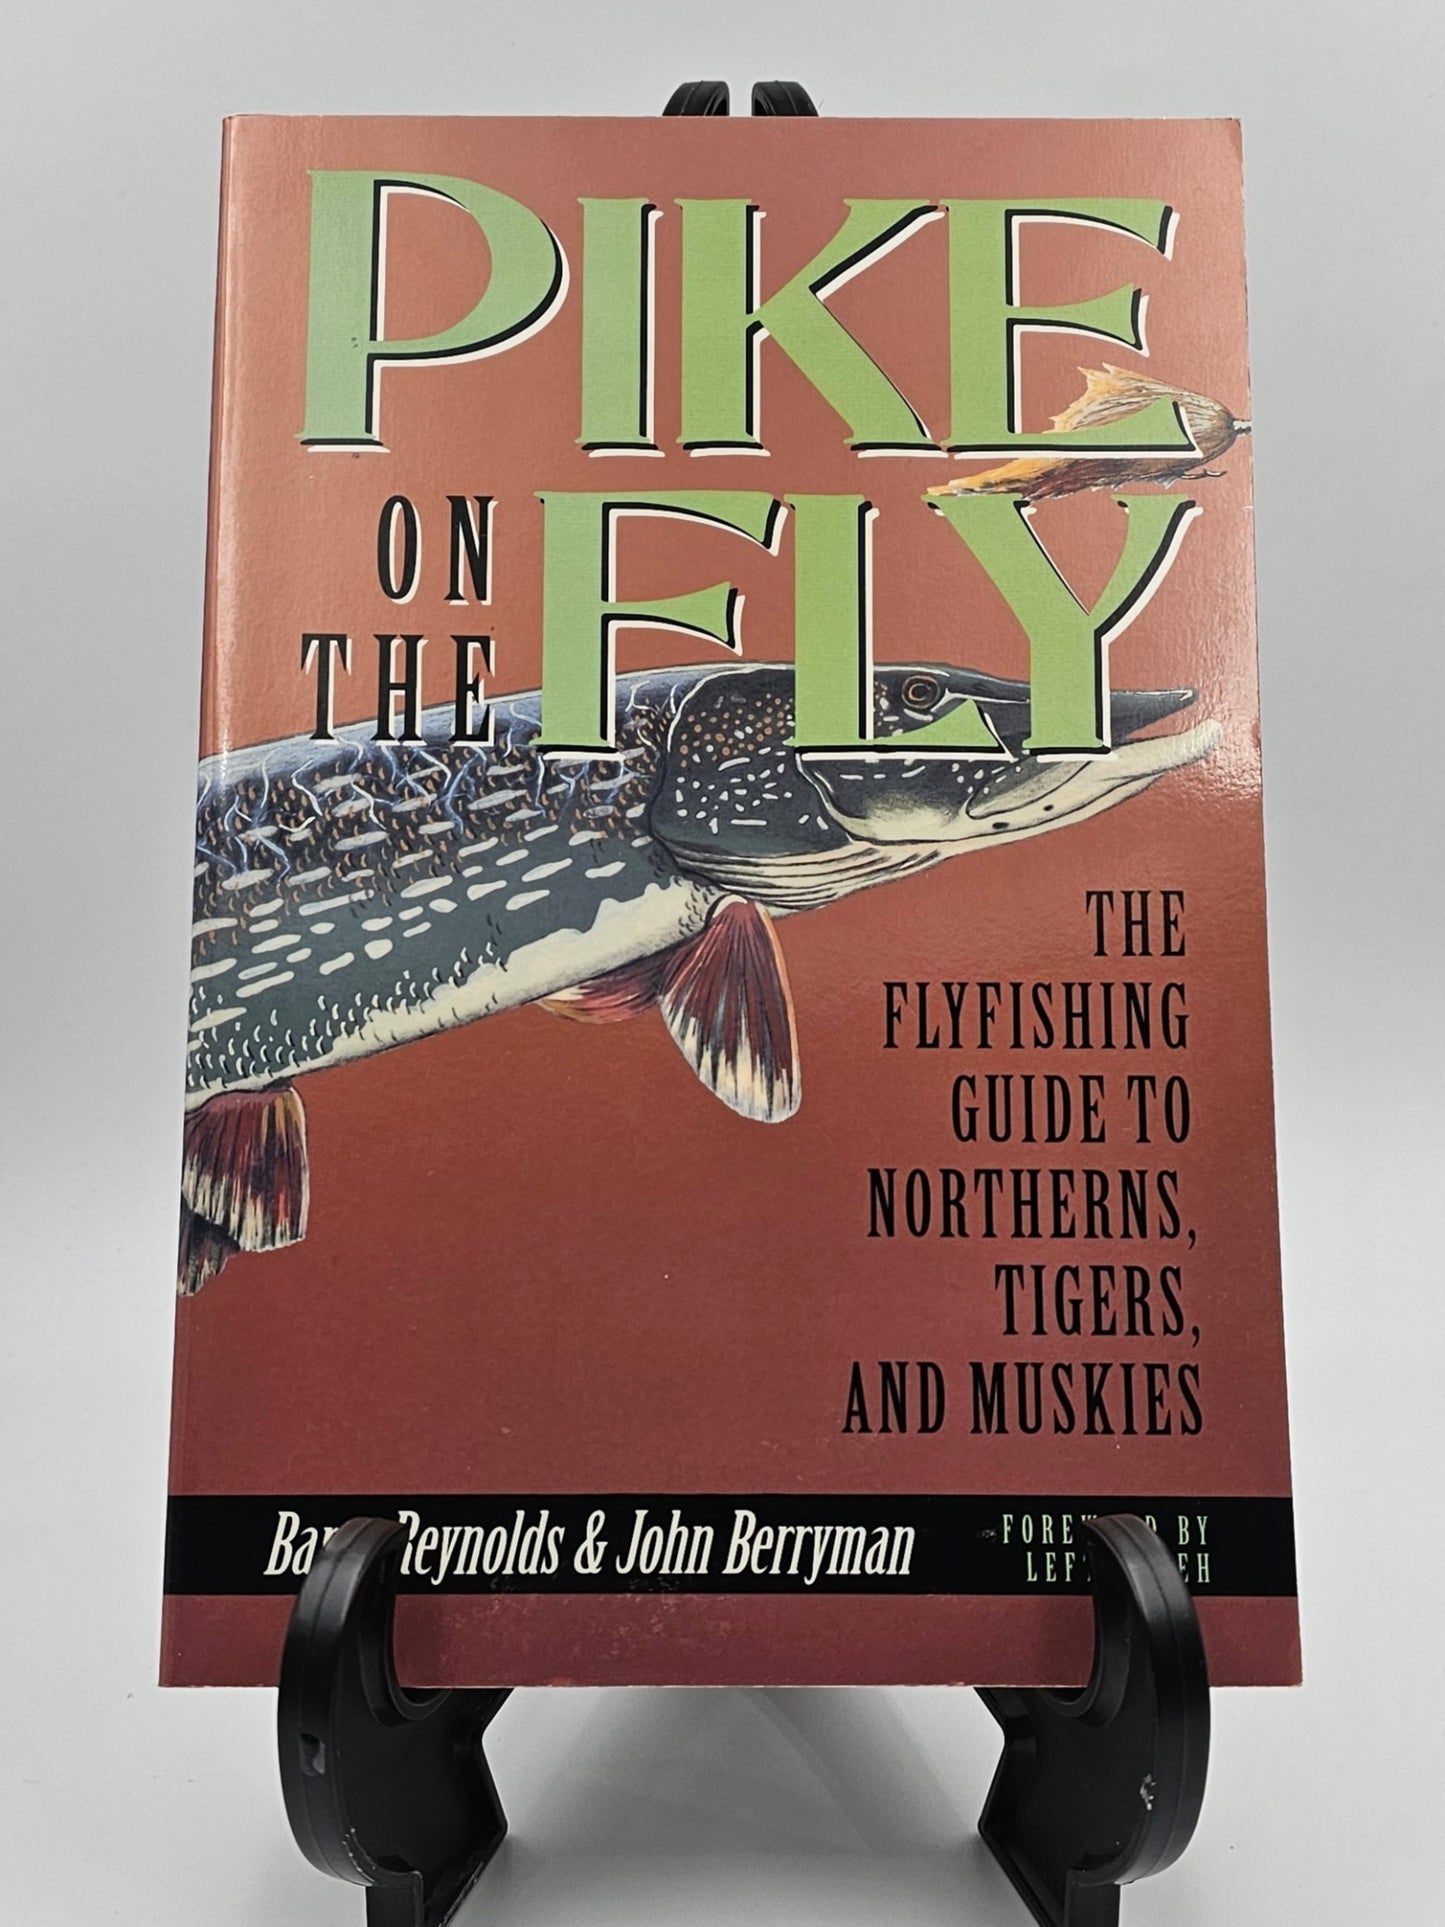 Pike on the Fly by Barry Reynolds & John Berryman